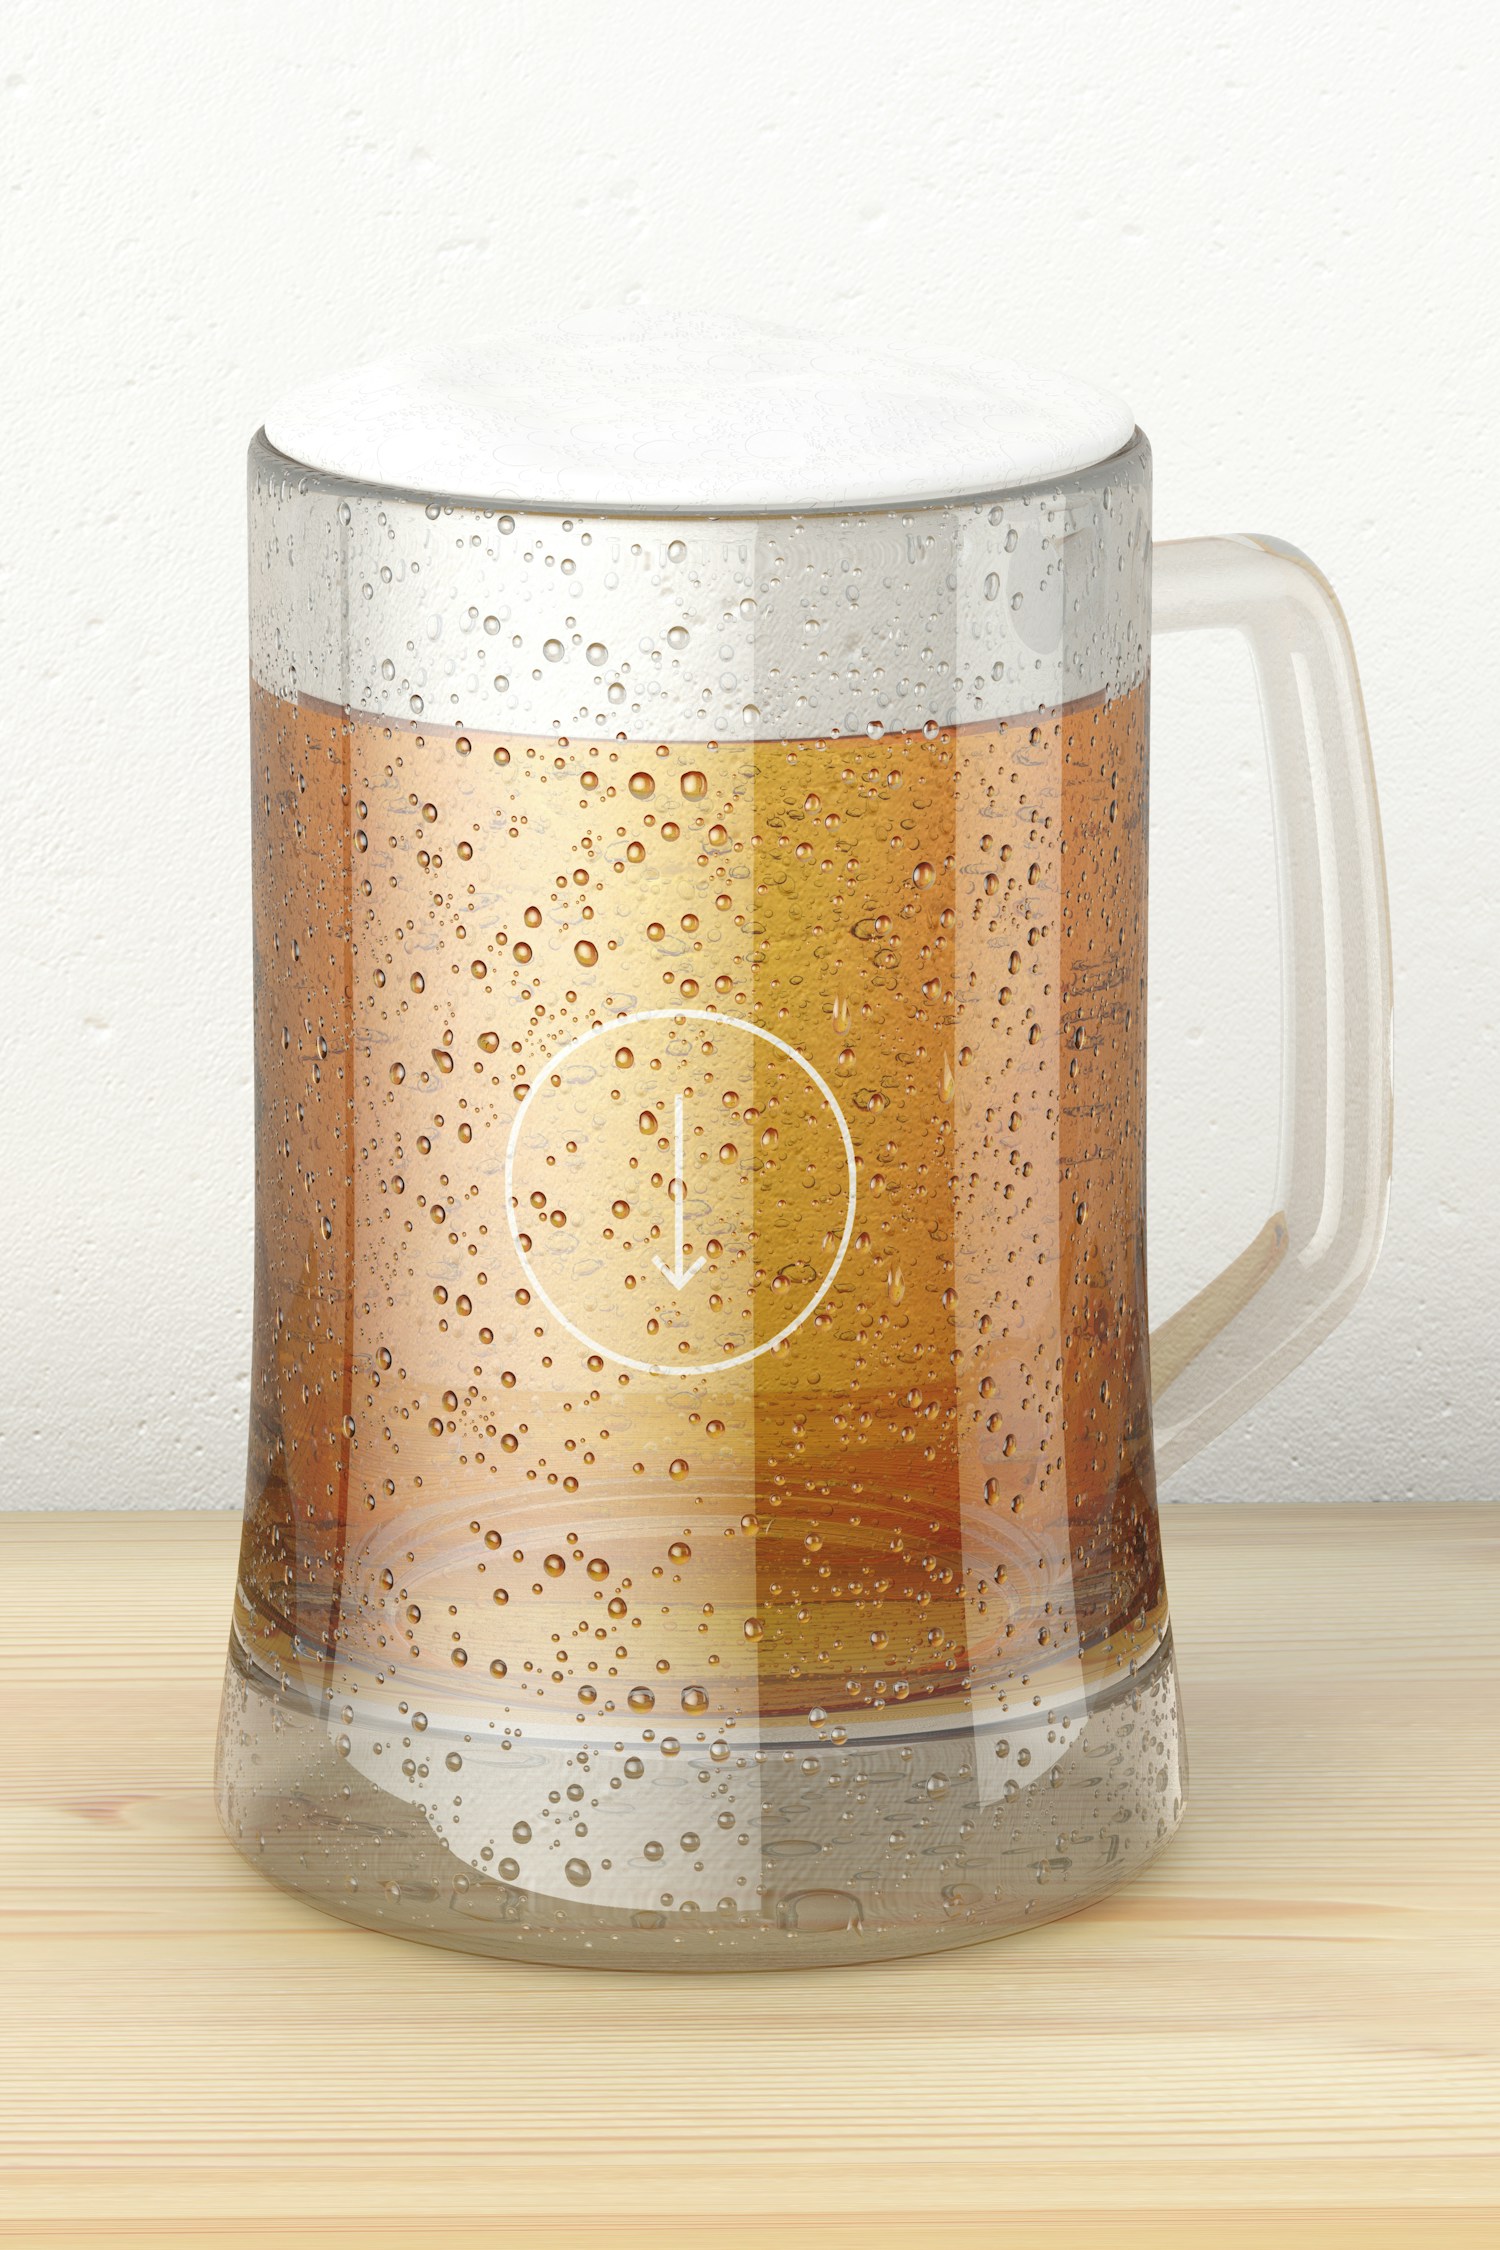 Beer Stein Glass Mockup, Perspective